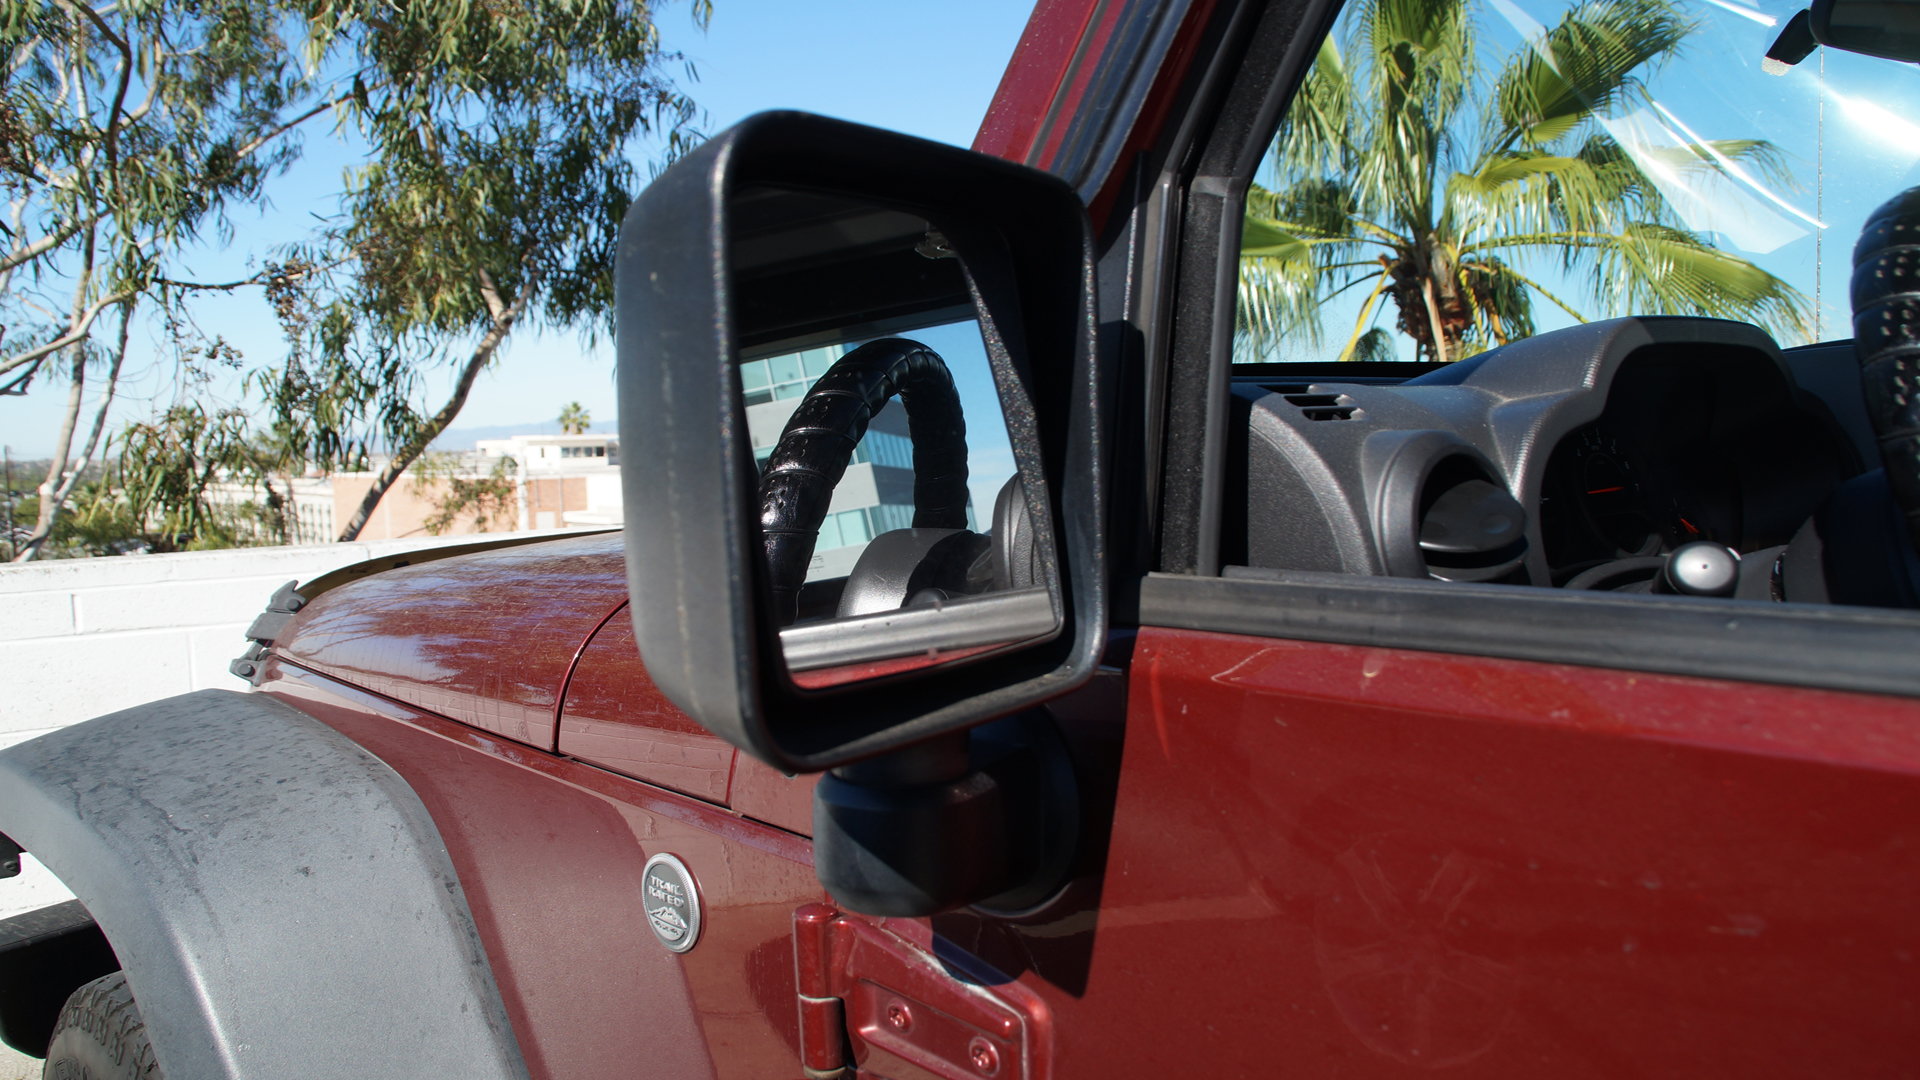 Jeep Wrangler JK: How to Relocate Side Mirror | Jk-forum